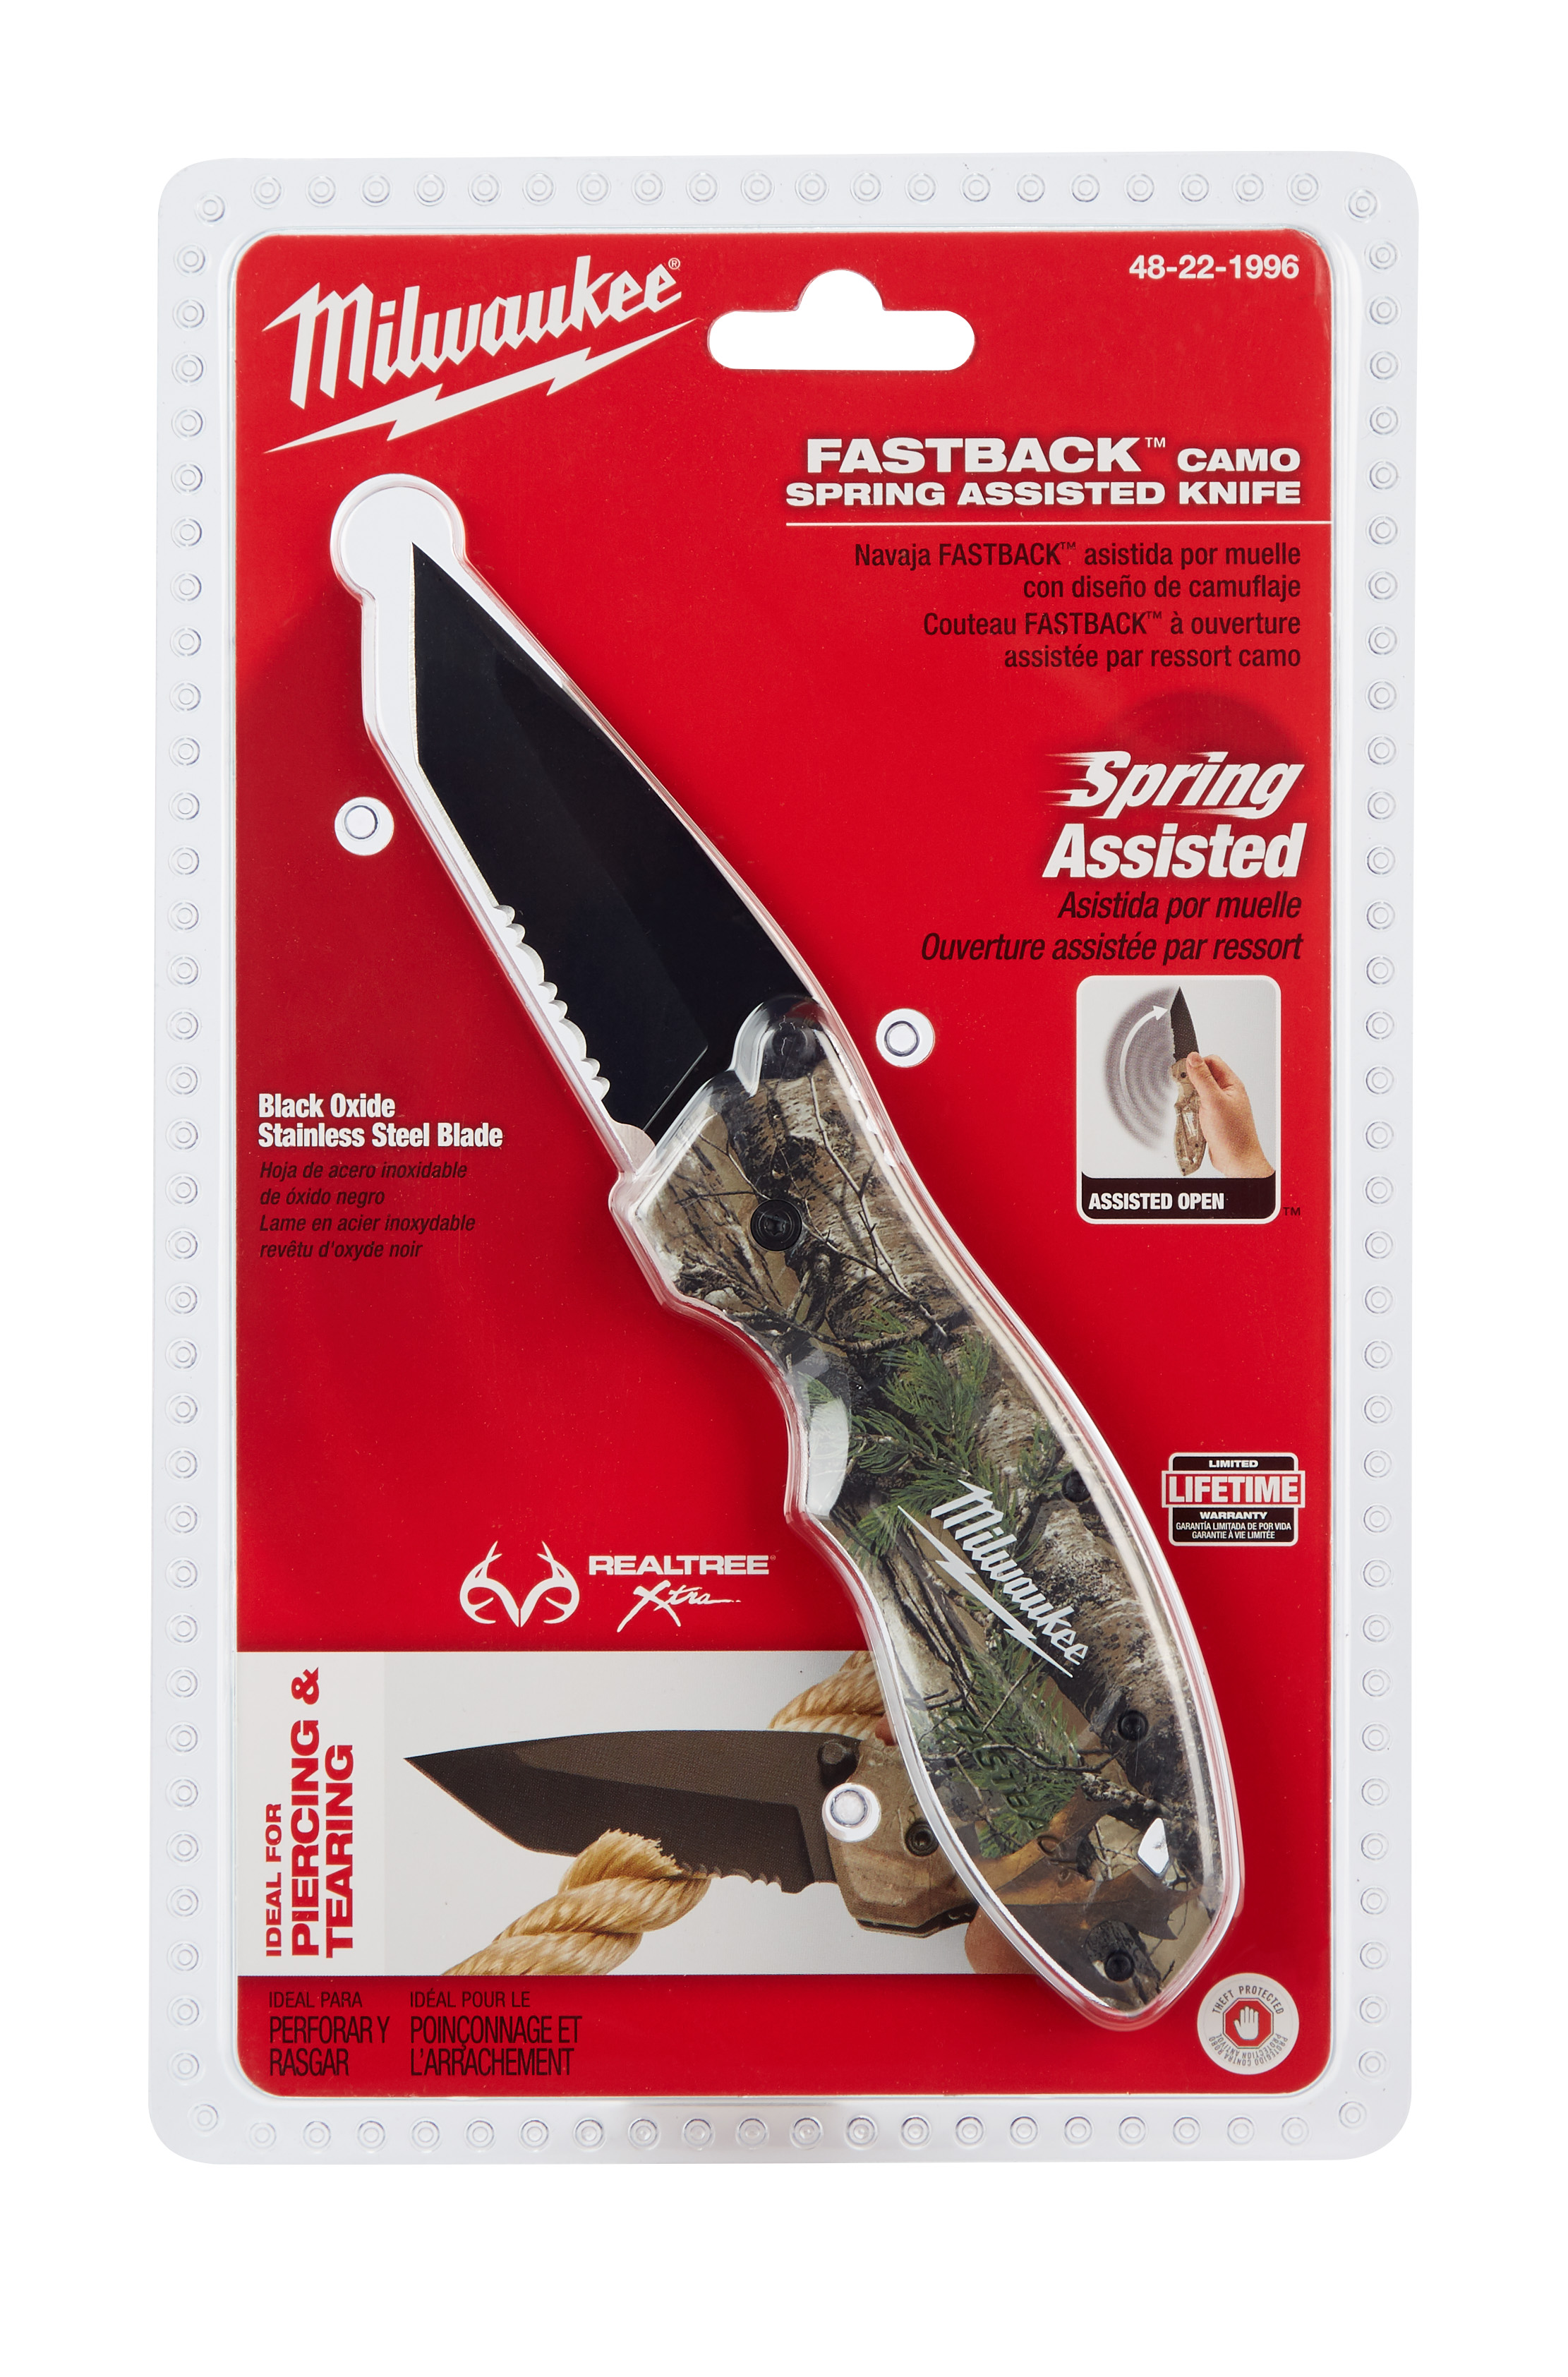 48221996 - Fastback Camo Spring Assisted Knife - Milwaukee